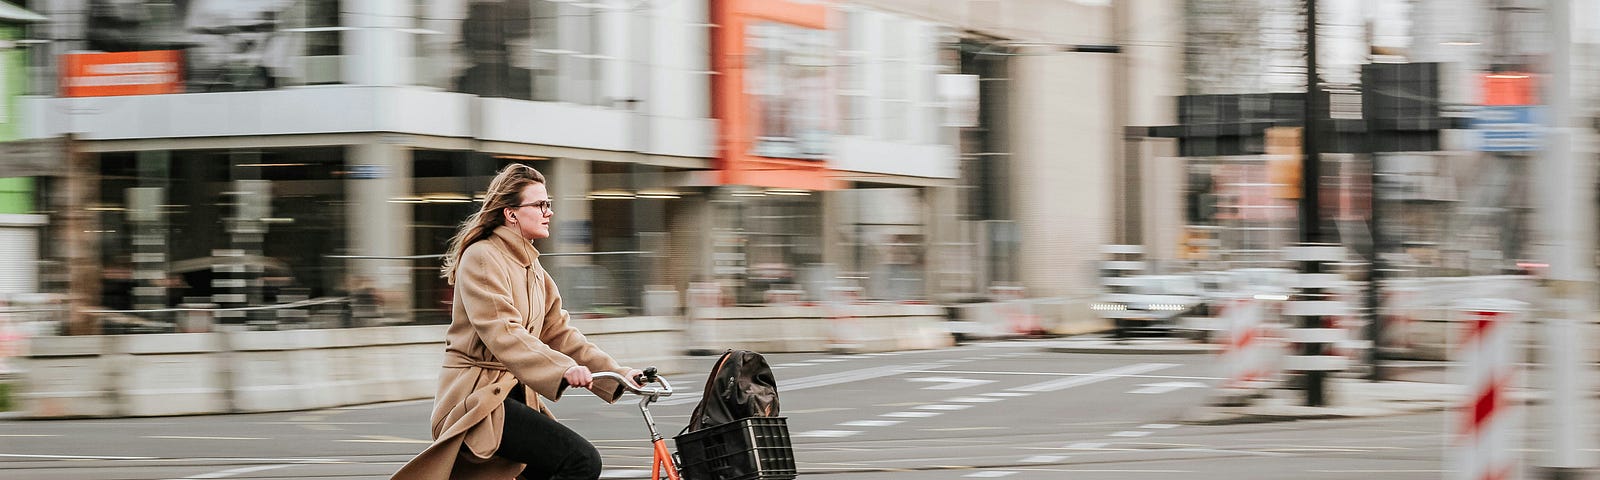 A woman riding a bike through an intersection.